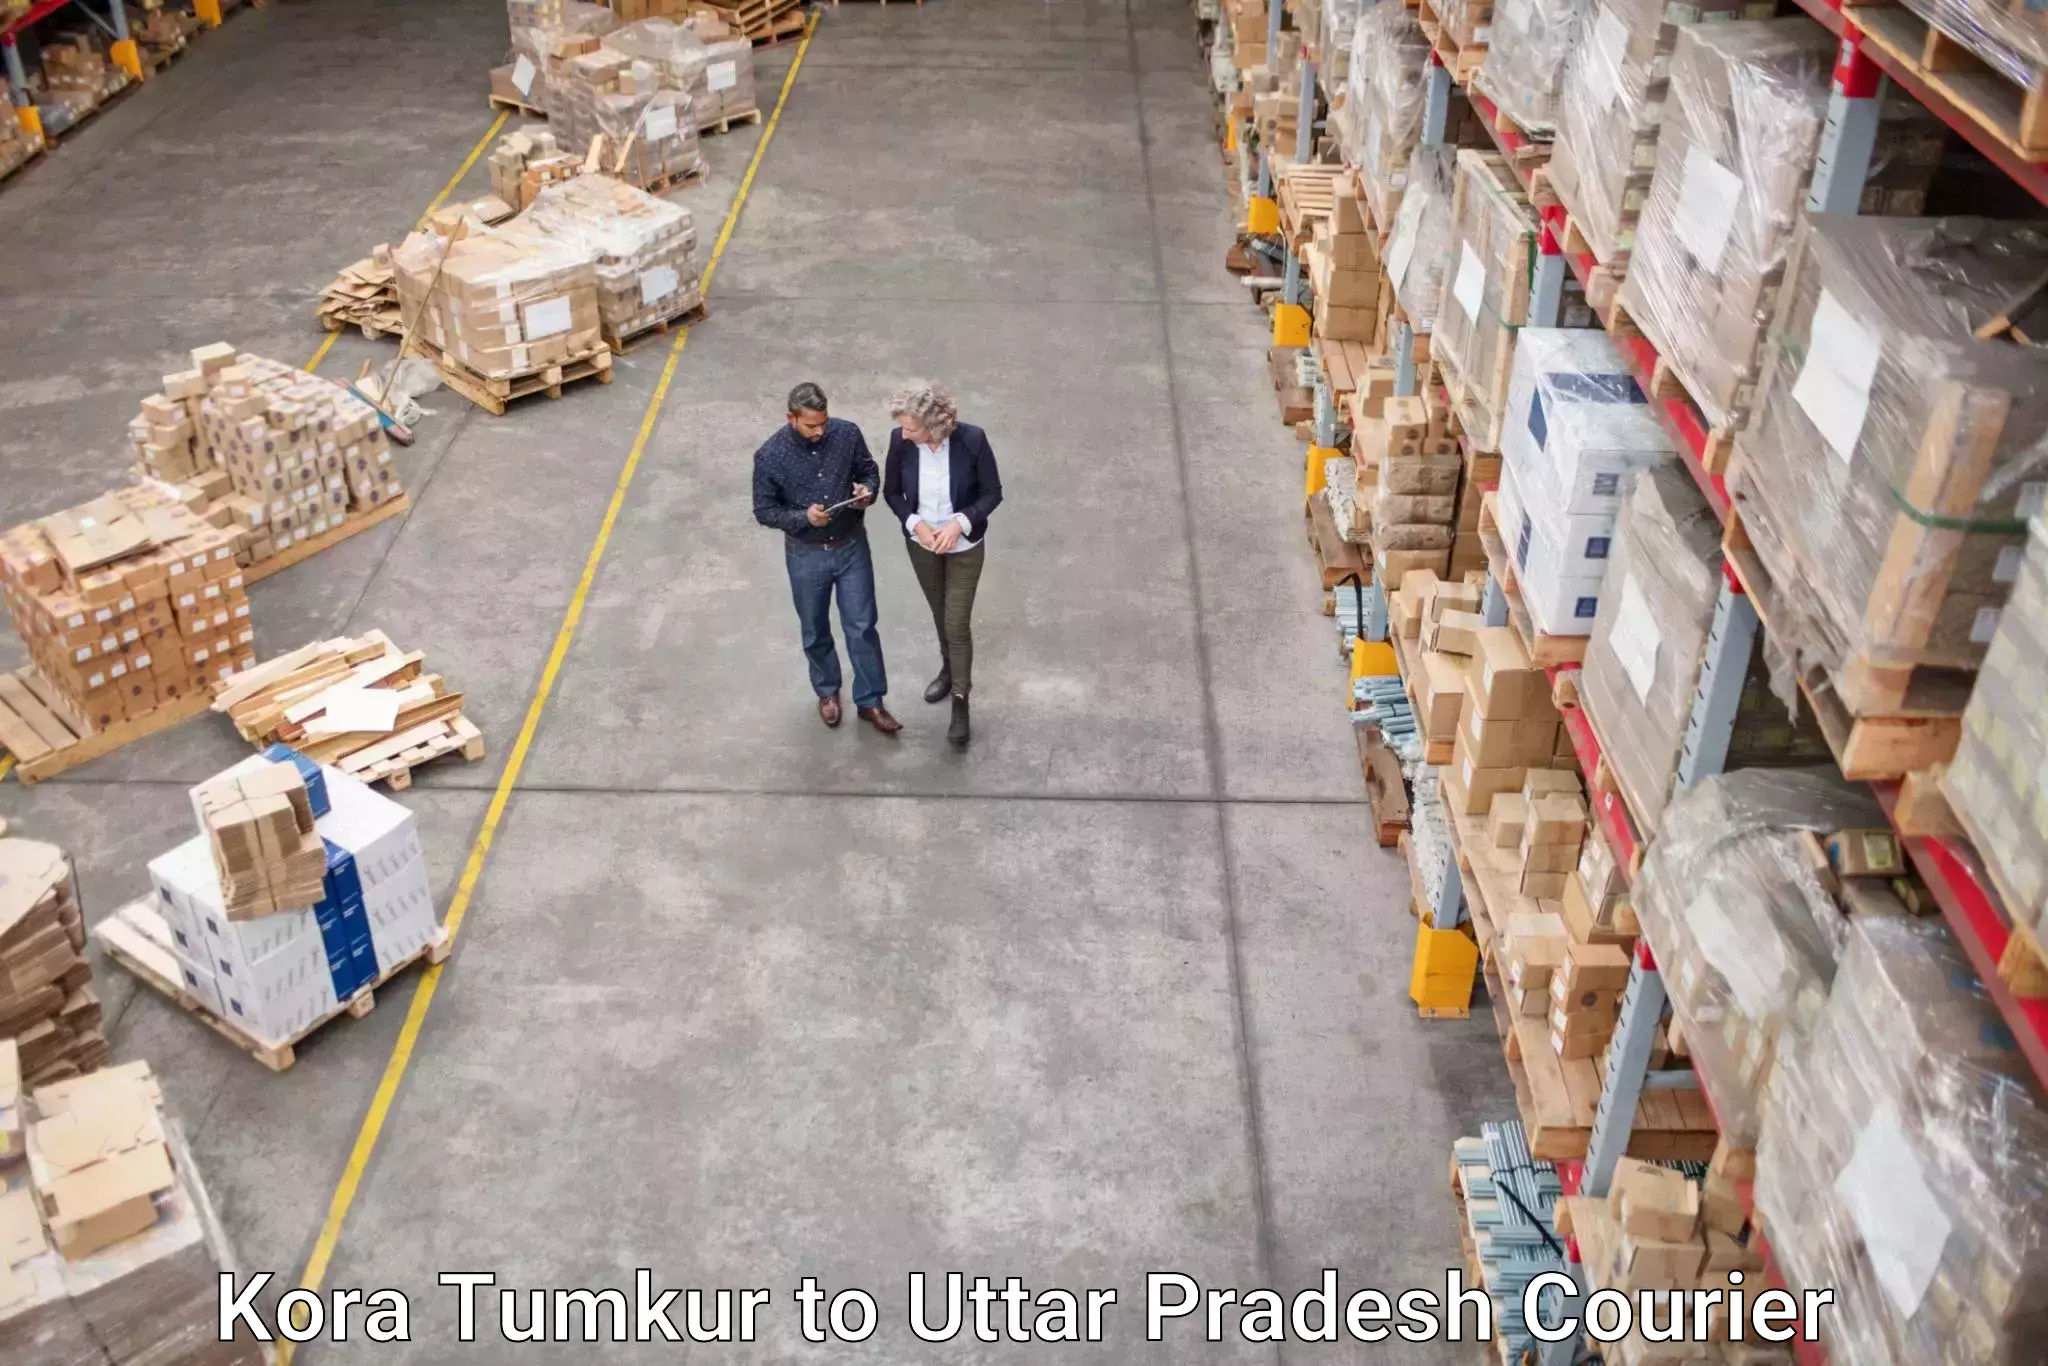 Reliable parcel services Kora Tumkur to Talbahat